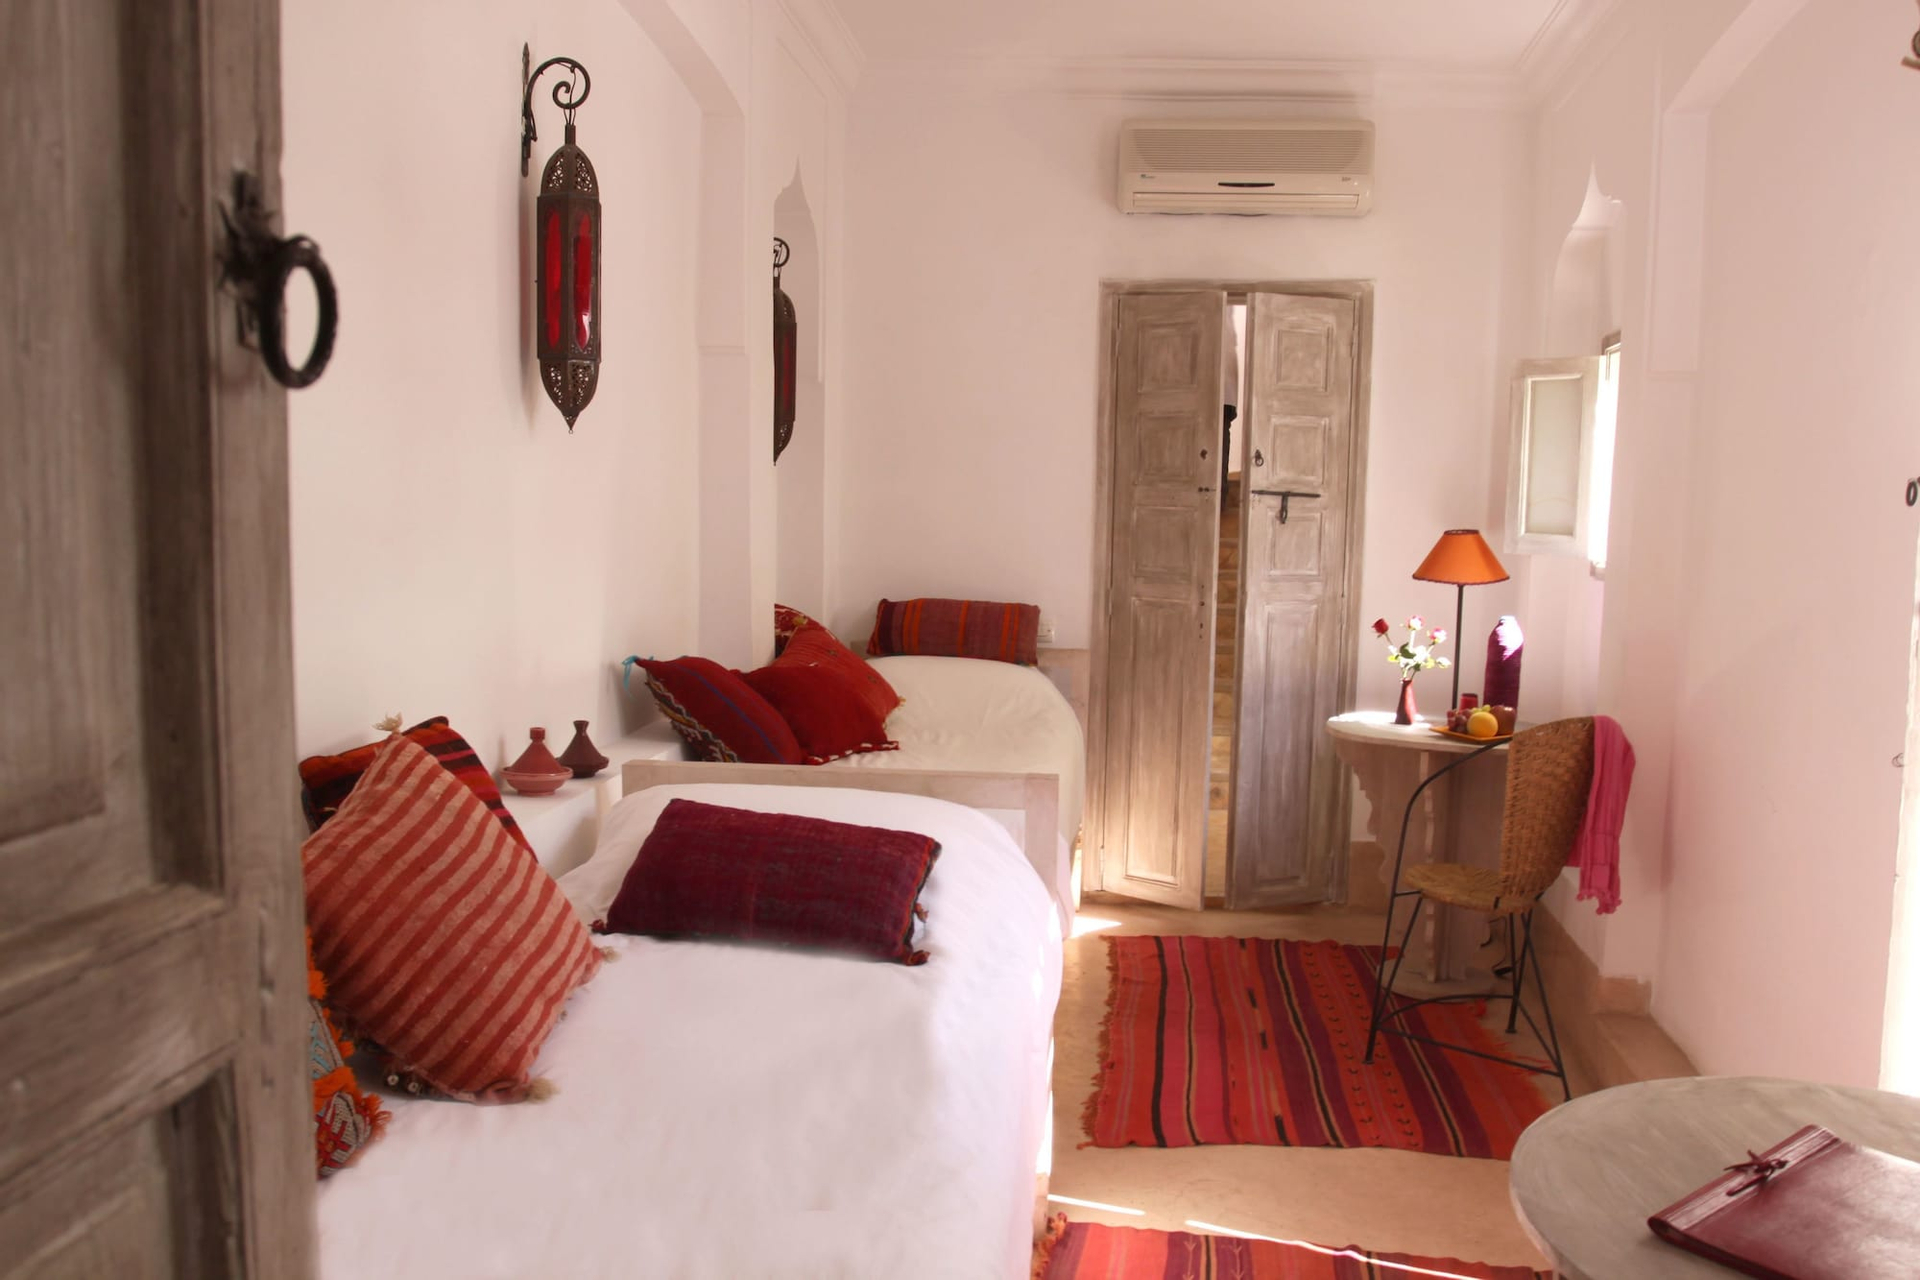 Bedroom 1, Riad O2, Marrakech